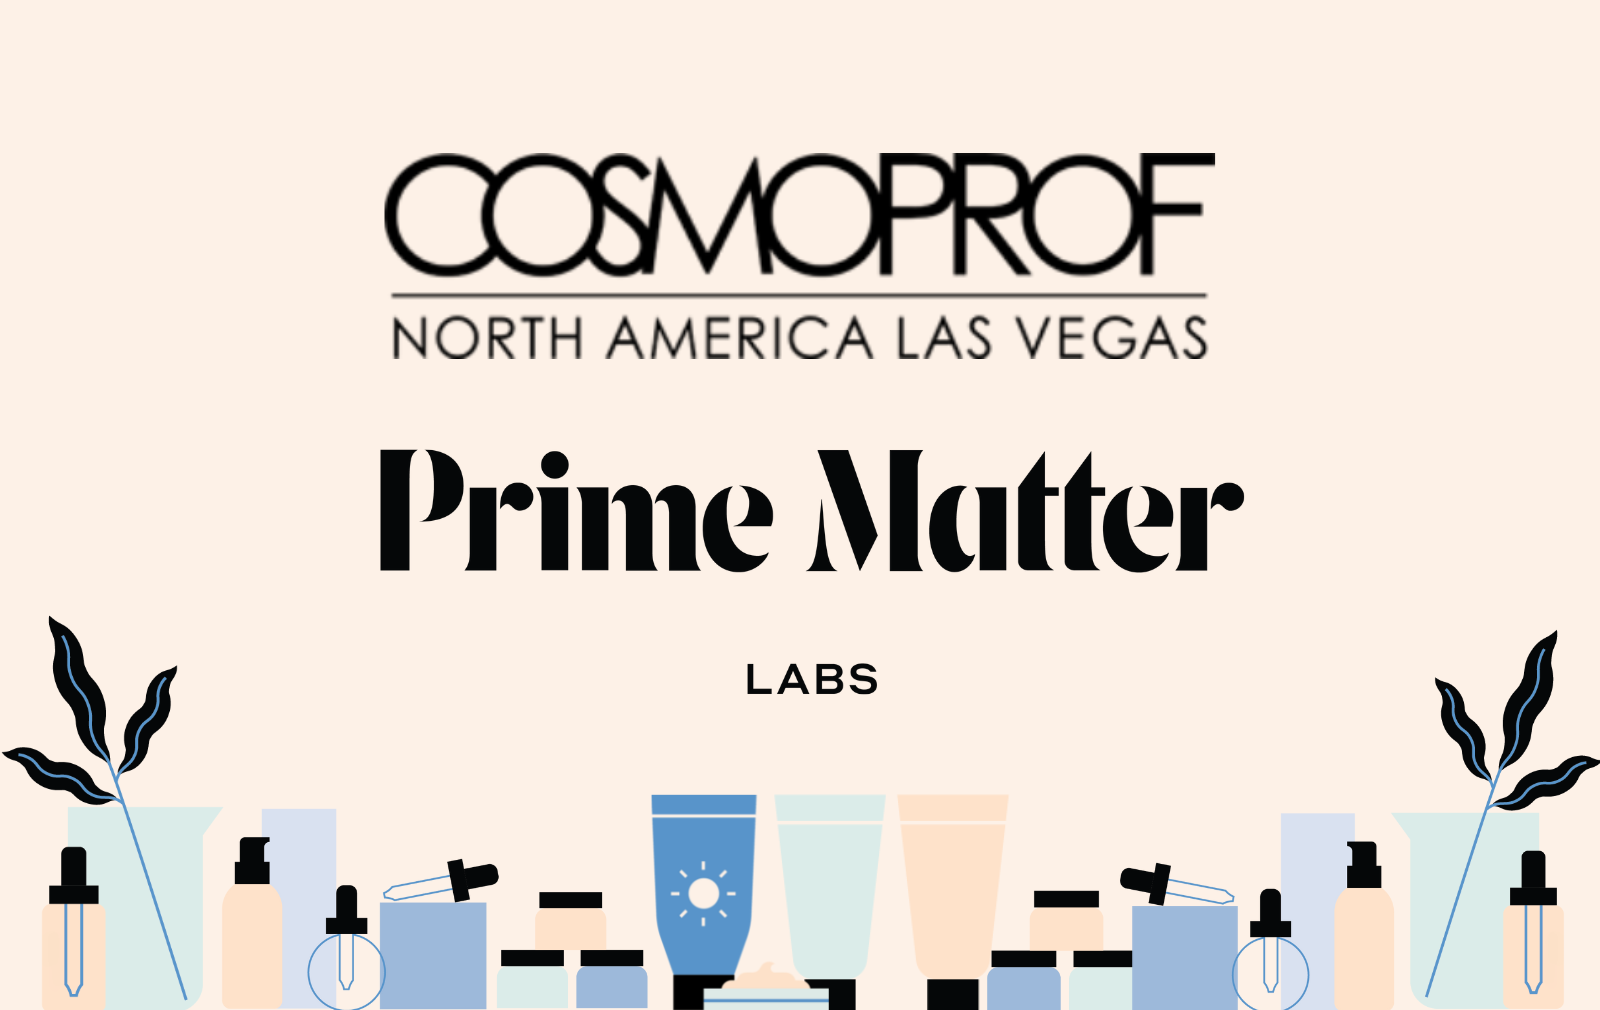 Prime Matter Labs at Cosmoprof North America 2022